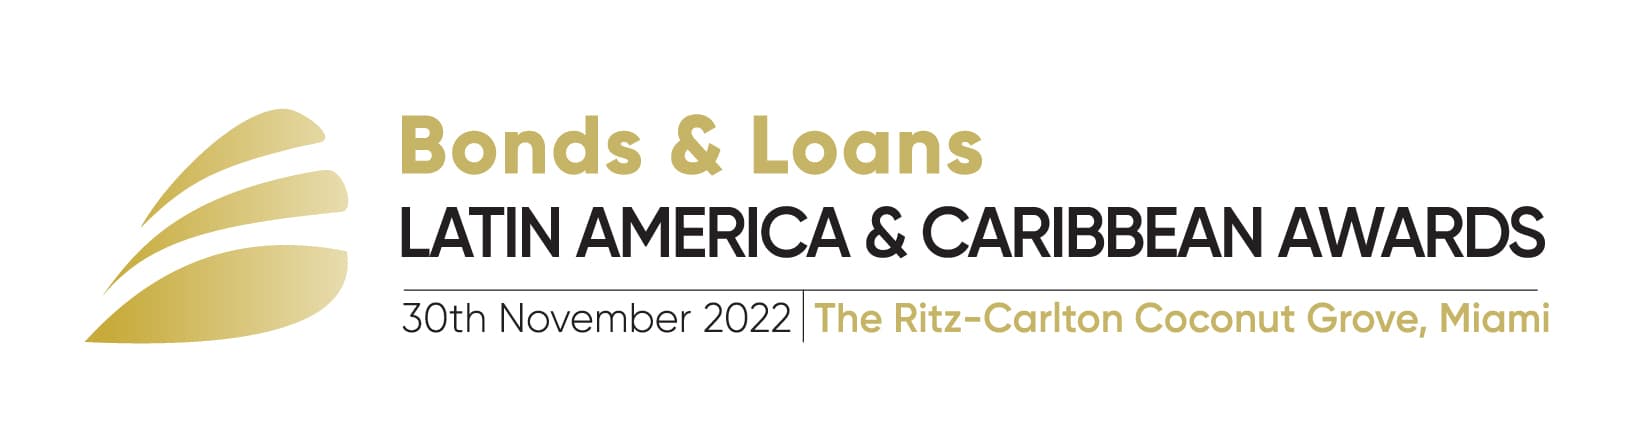 Bonds & Loans Latin America & Caribbean AWARDS 2022